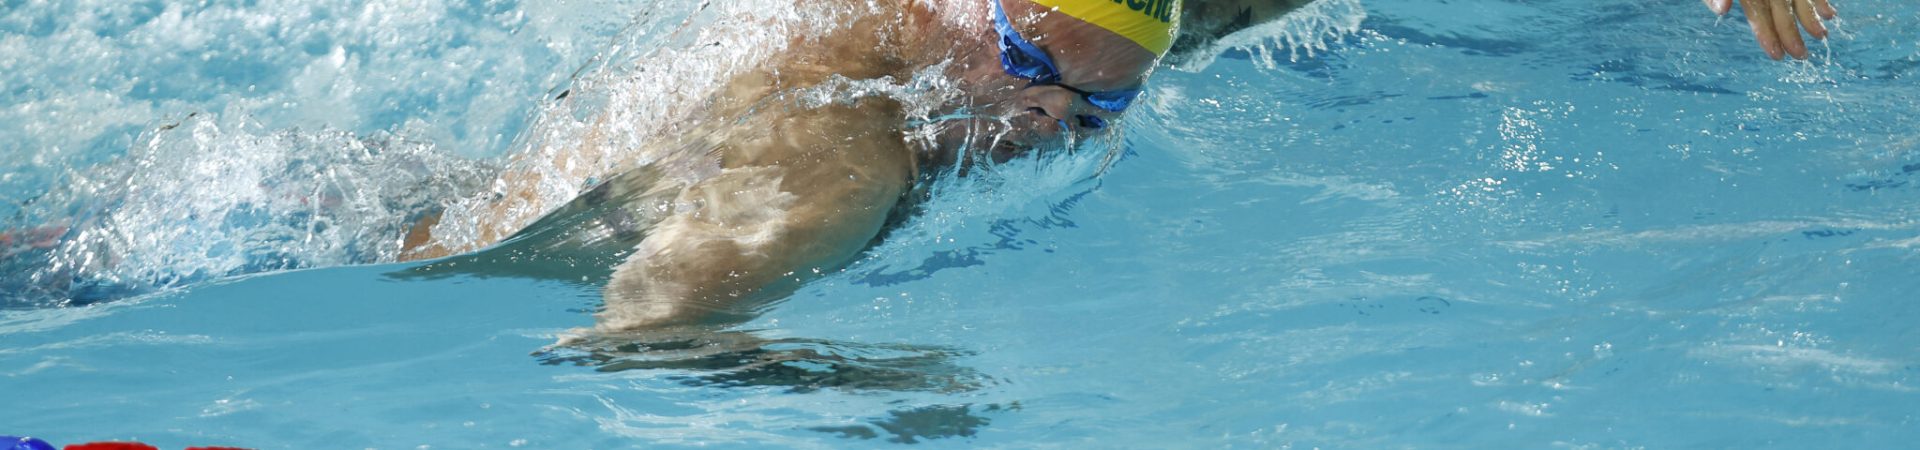 Blockchain UPCX sponsors Qatar’s World Swimming Championships